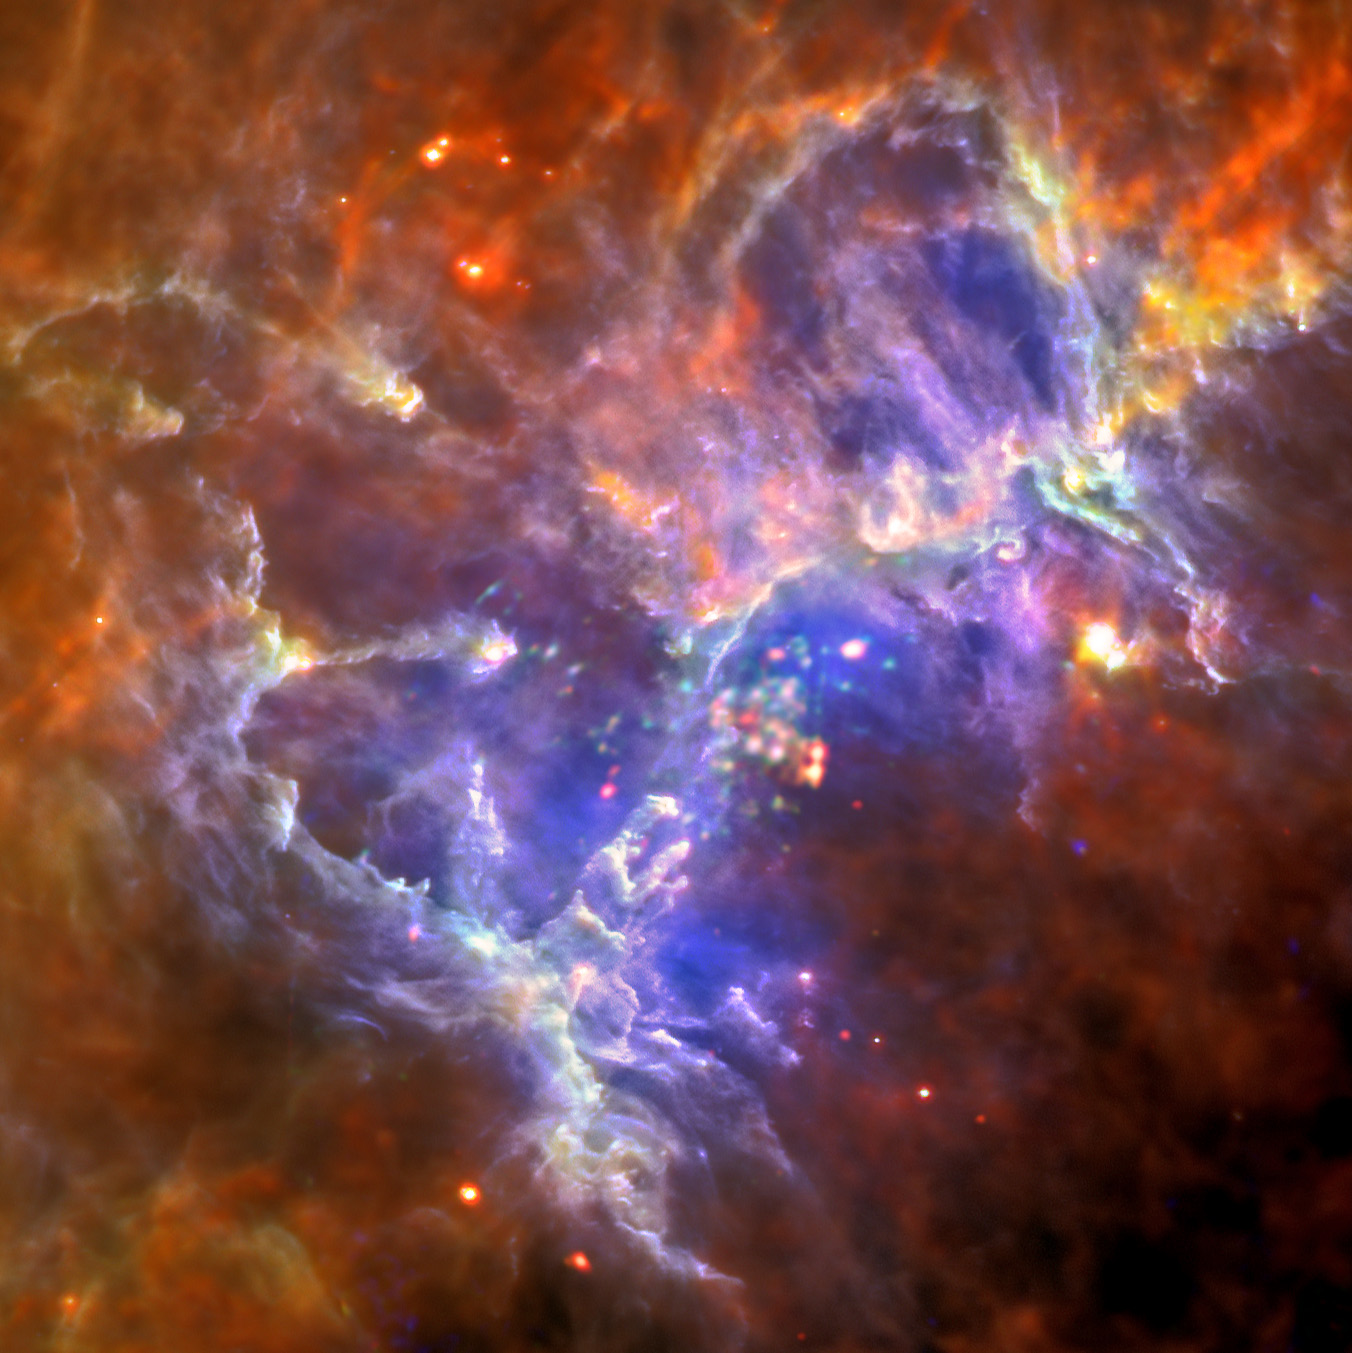 Detaljer i Ørnetåken. De unge, hete stjernene som sees i røntgen former de ekstremt kalde gassene og støvet rundt stjernehopen. Disse superkalde områdene danner solsystemer. Foto: ESA/Herschel/PACS/SPIRE/Hill, Motte, HOBYS Key Programme Consortium, ESA/XMM-Newton/EPIC/XMM-Newton-SOC/Boulanger